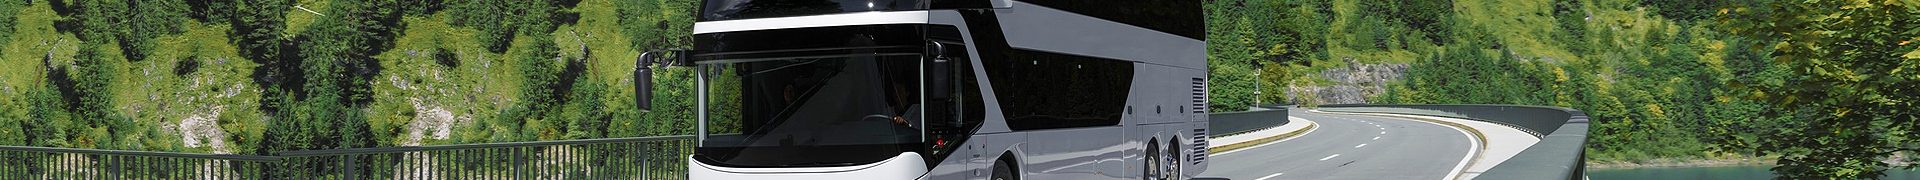 Туристический автобус Neoplan с камерами вместо зеркал